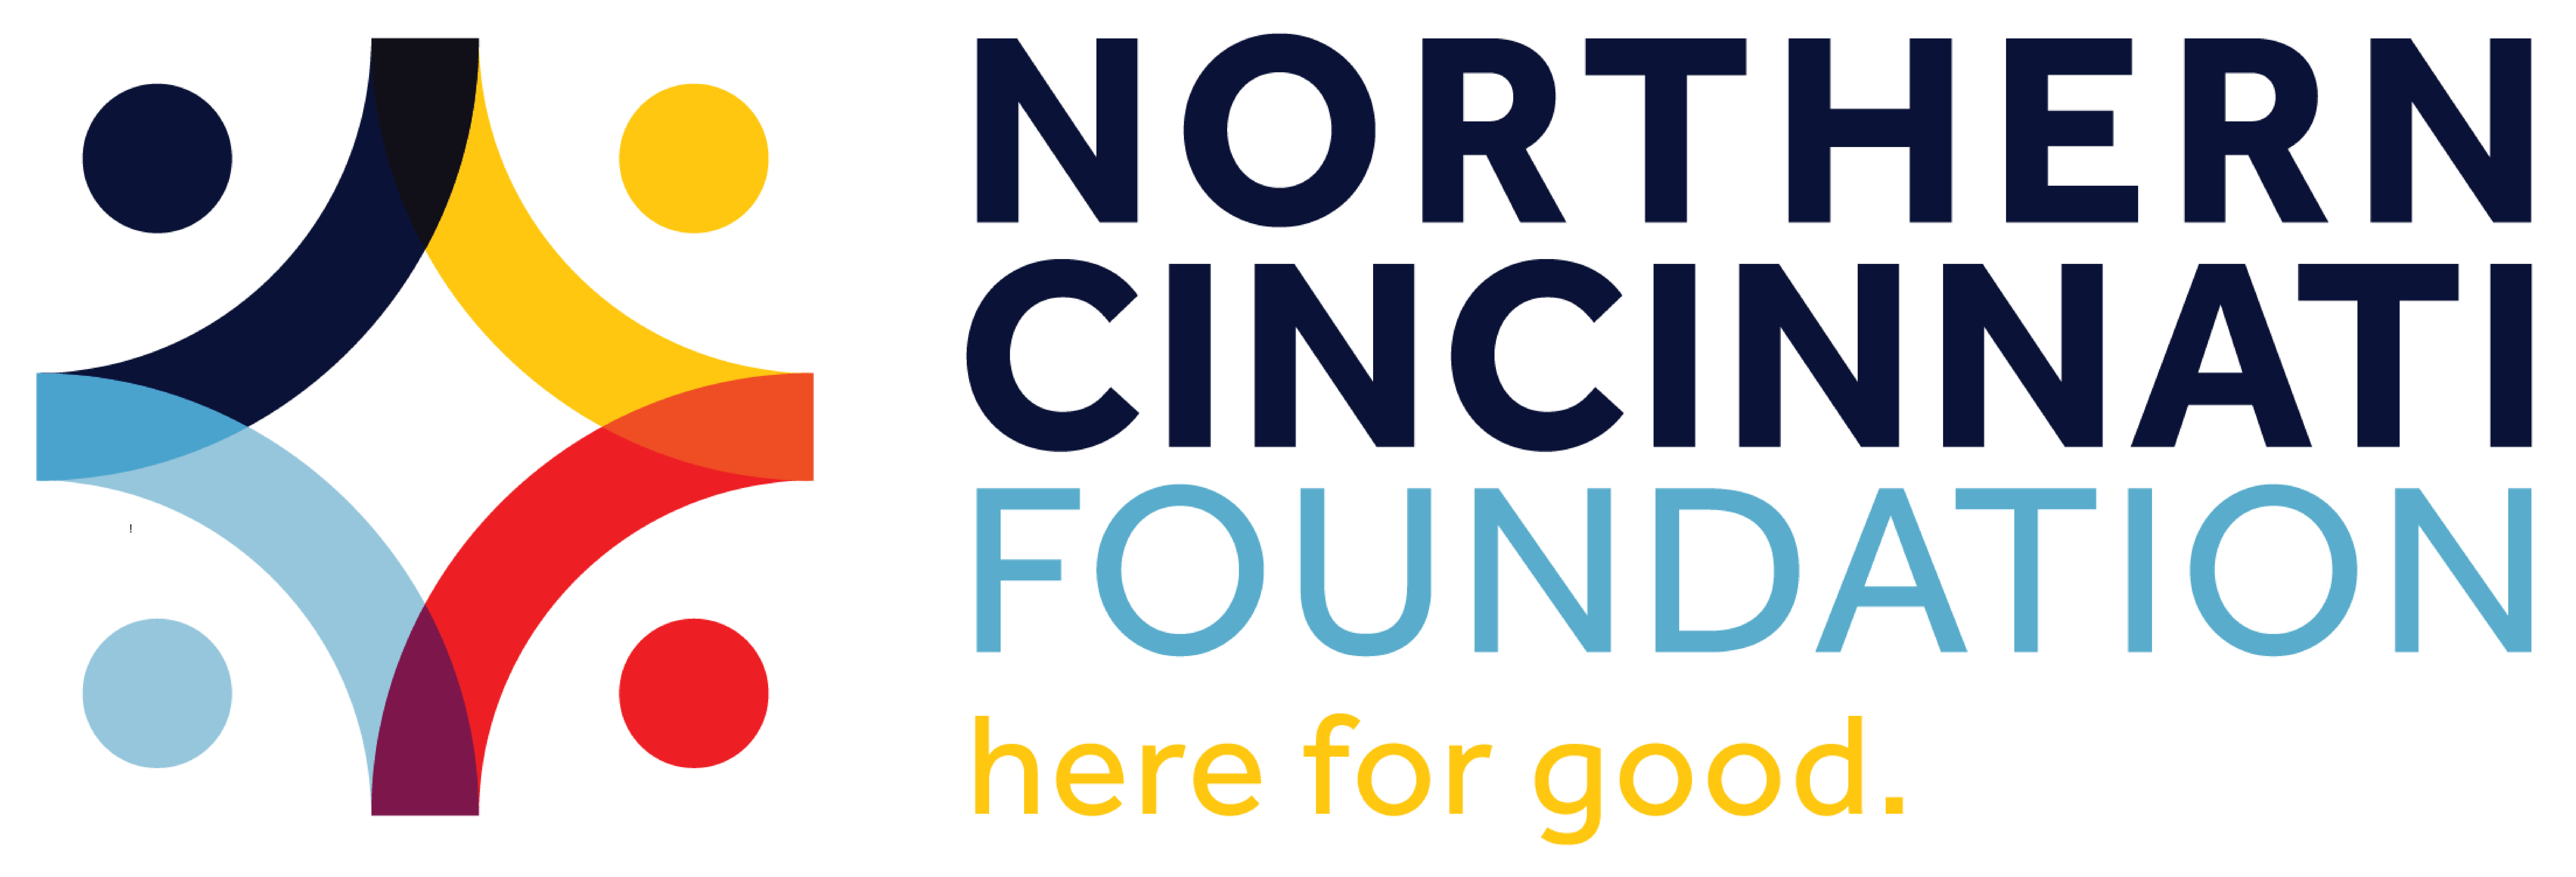 Northern Community Foundation